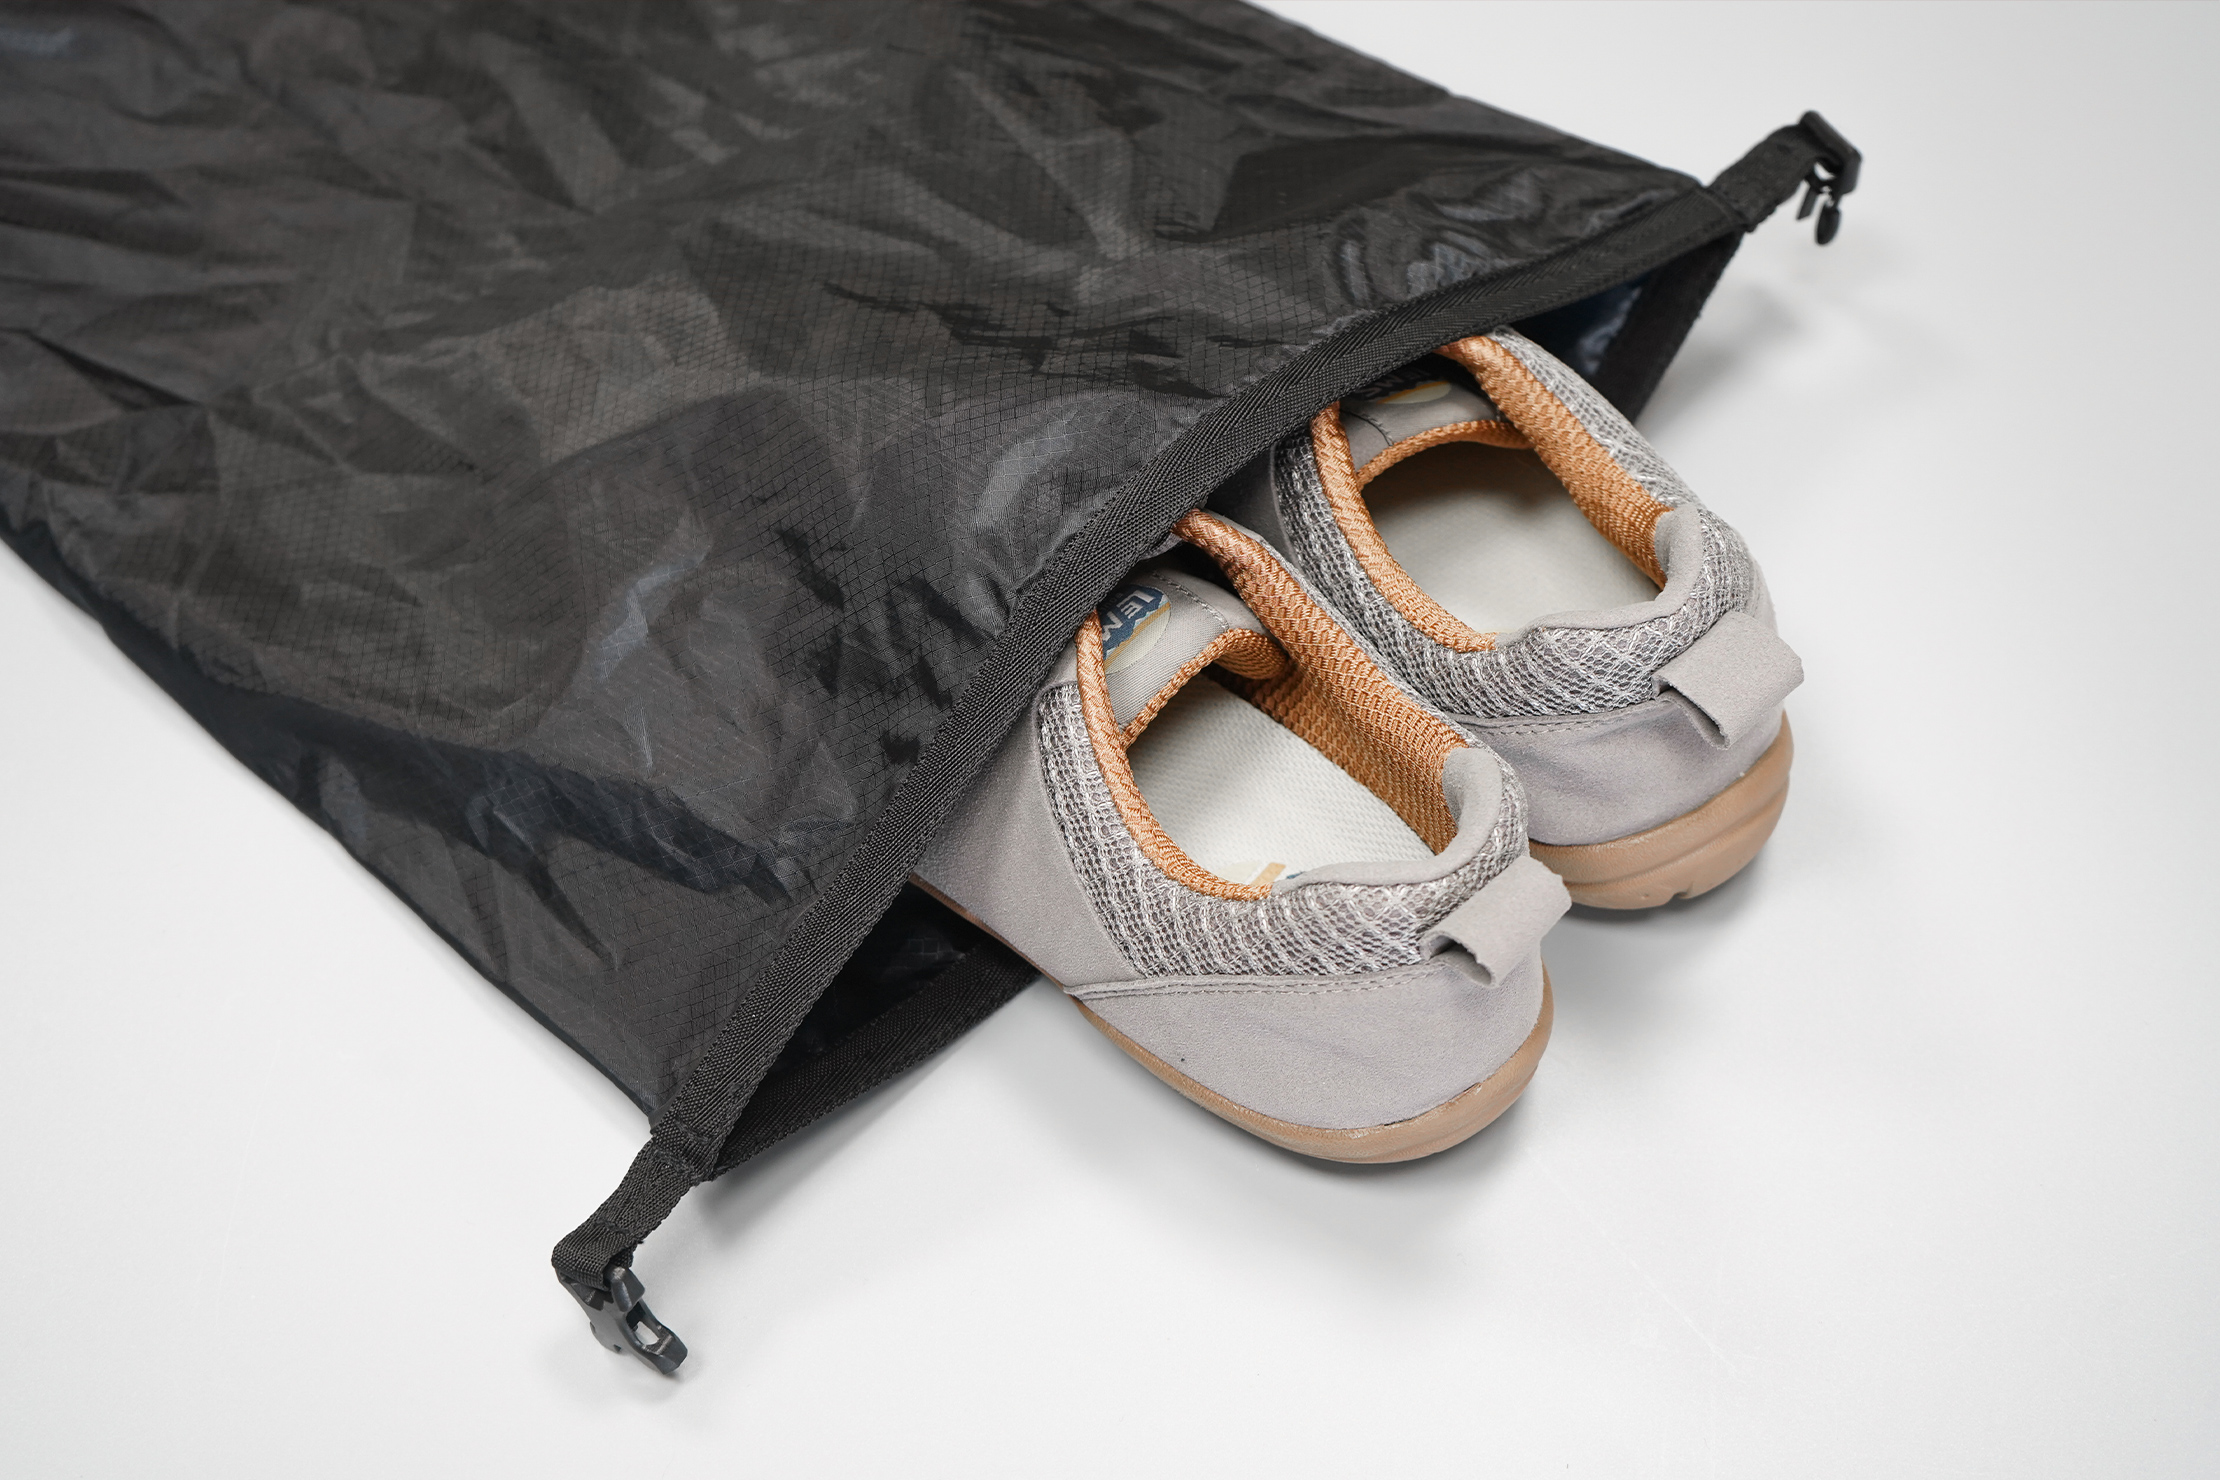 Eagle Creek Pack-It Isolate shoe sac